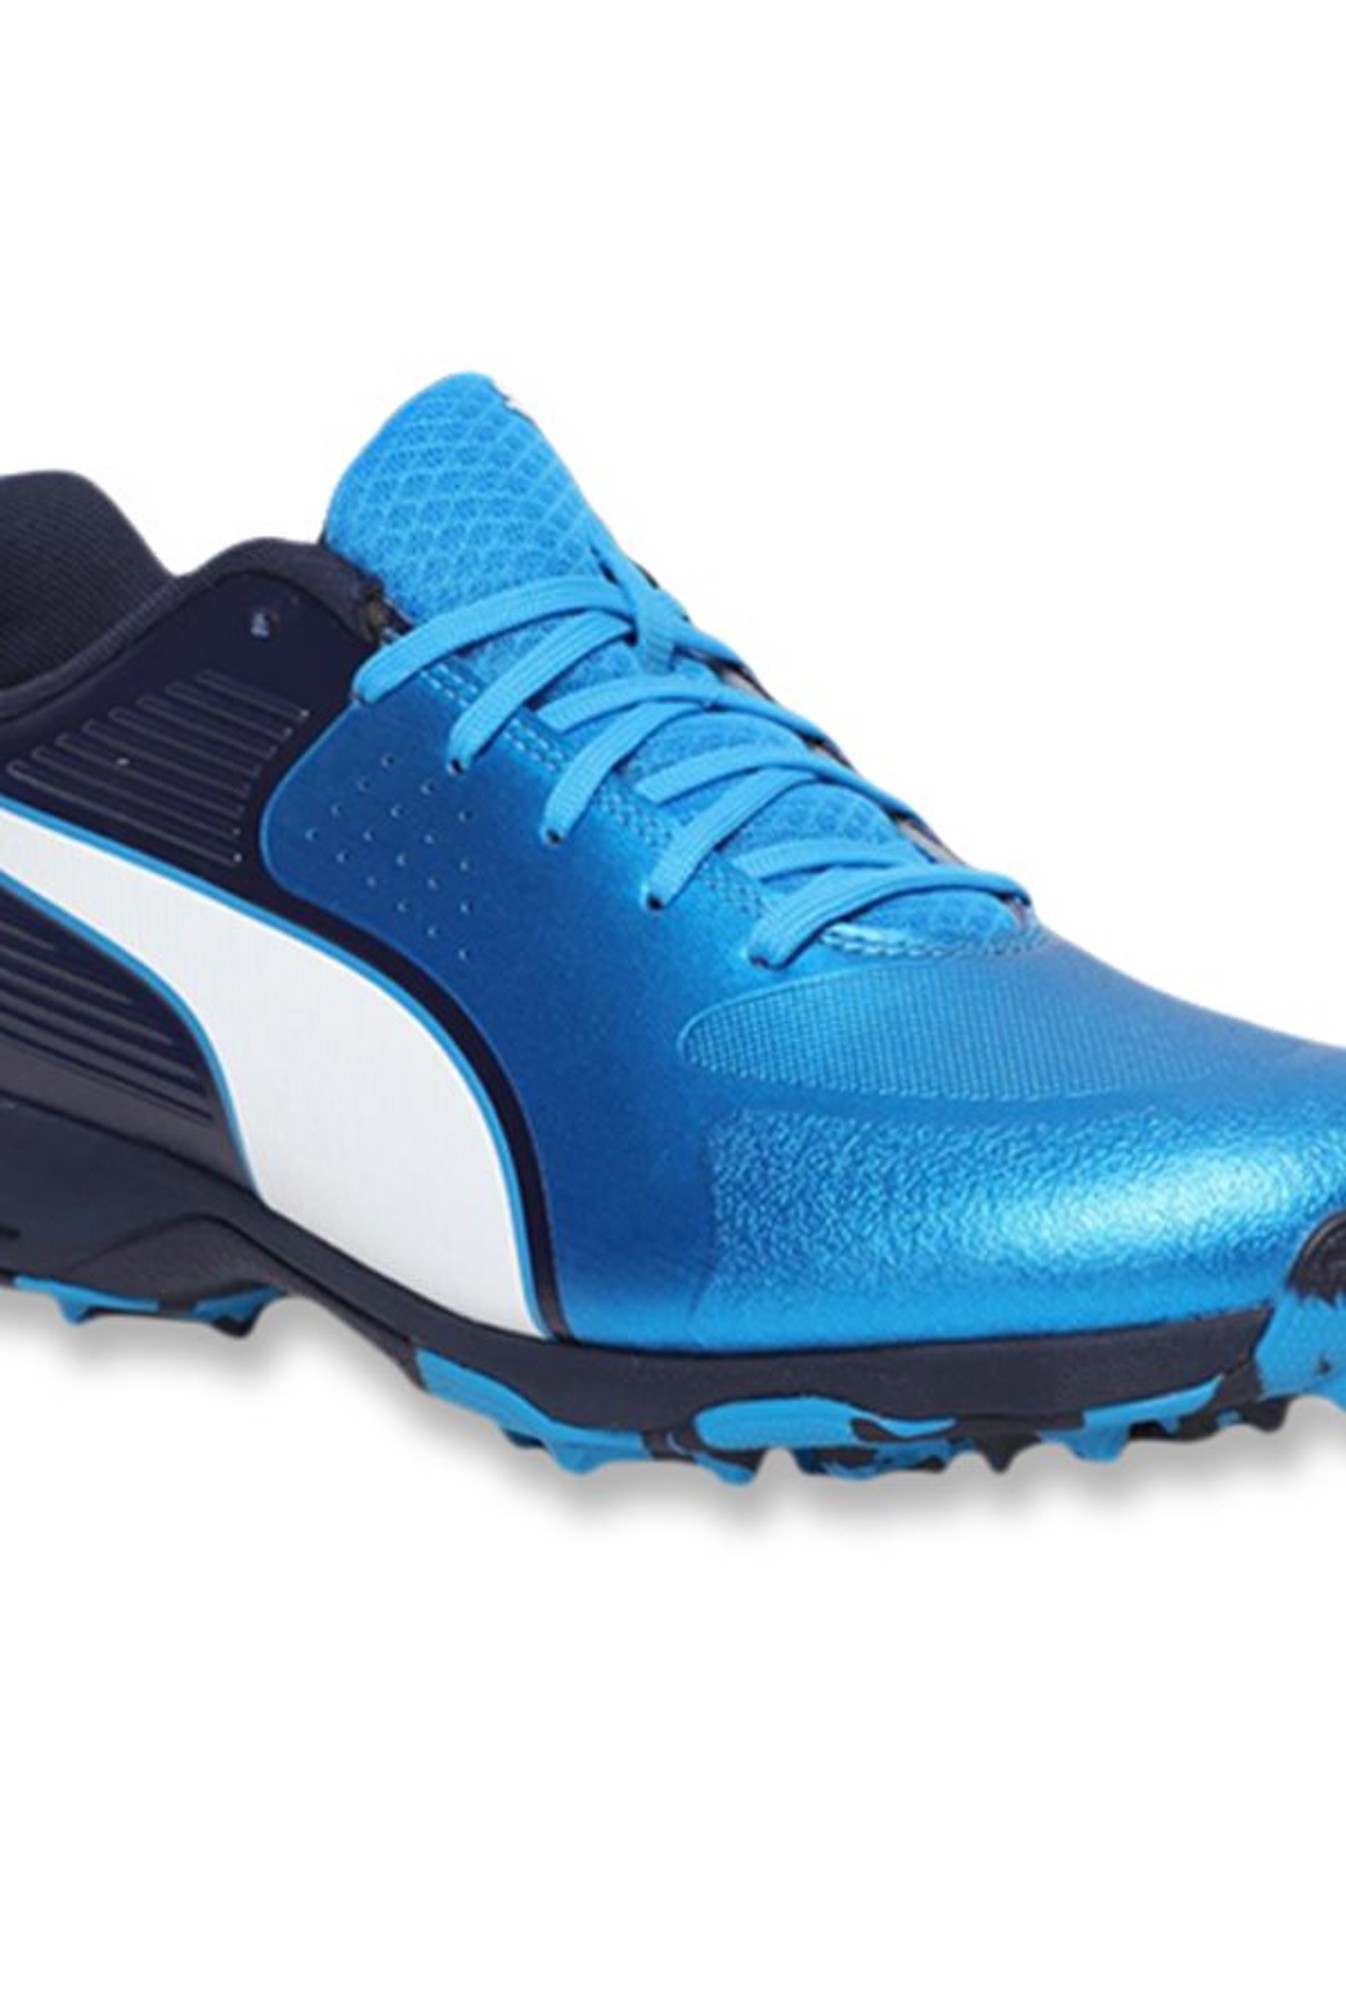 puma one8 cricket shoes blue